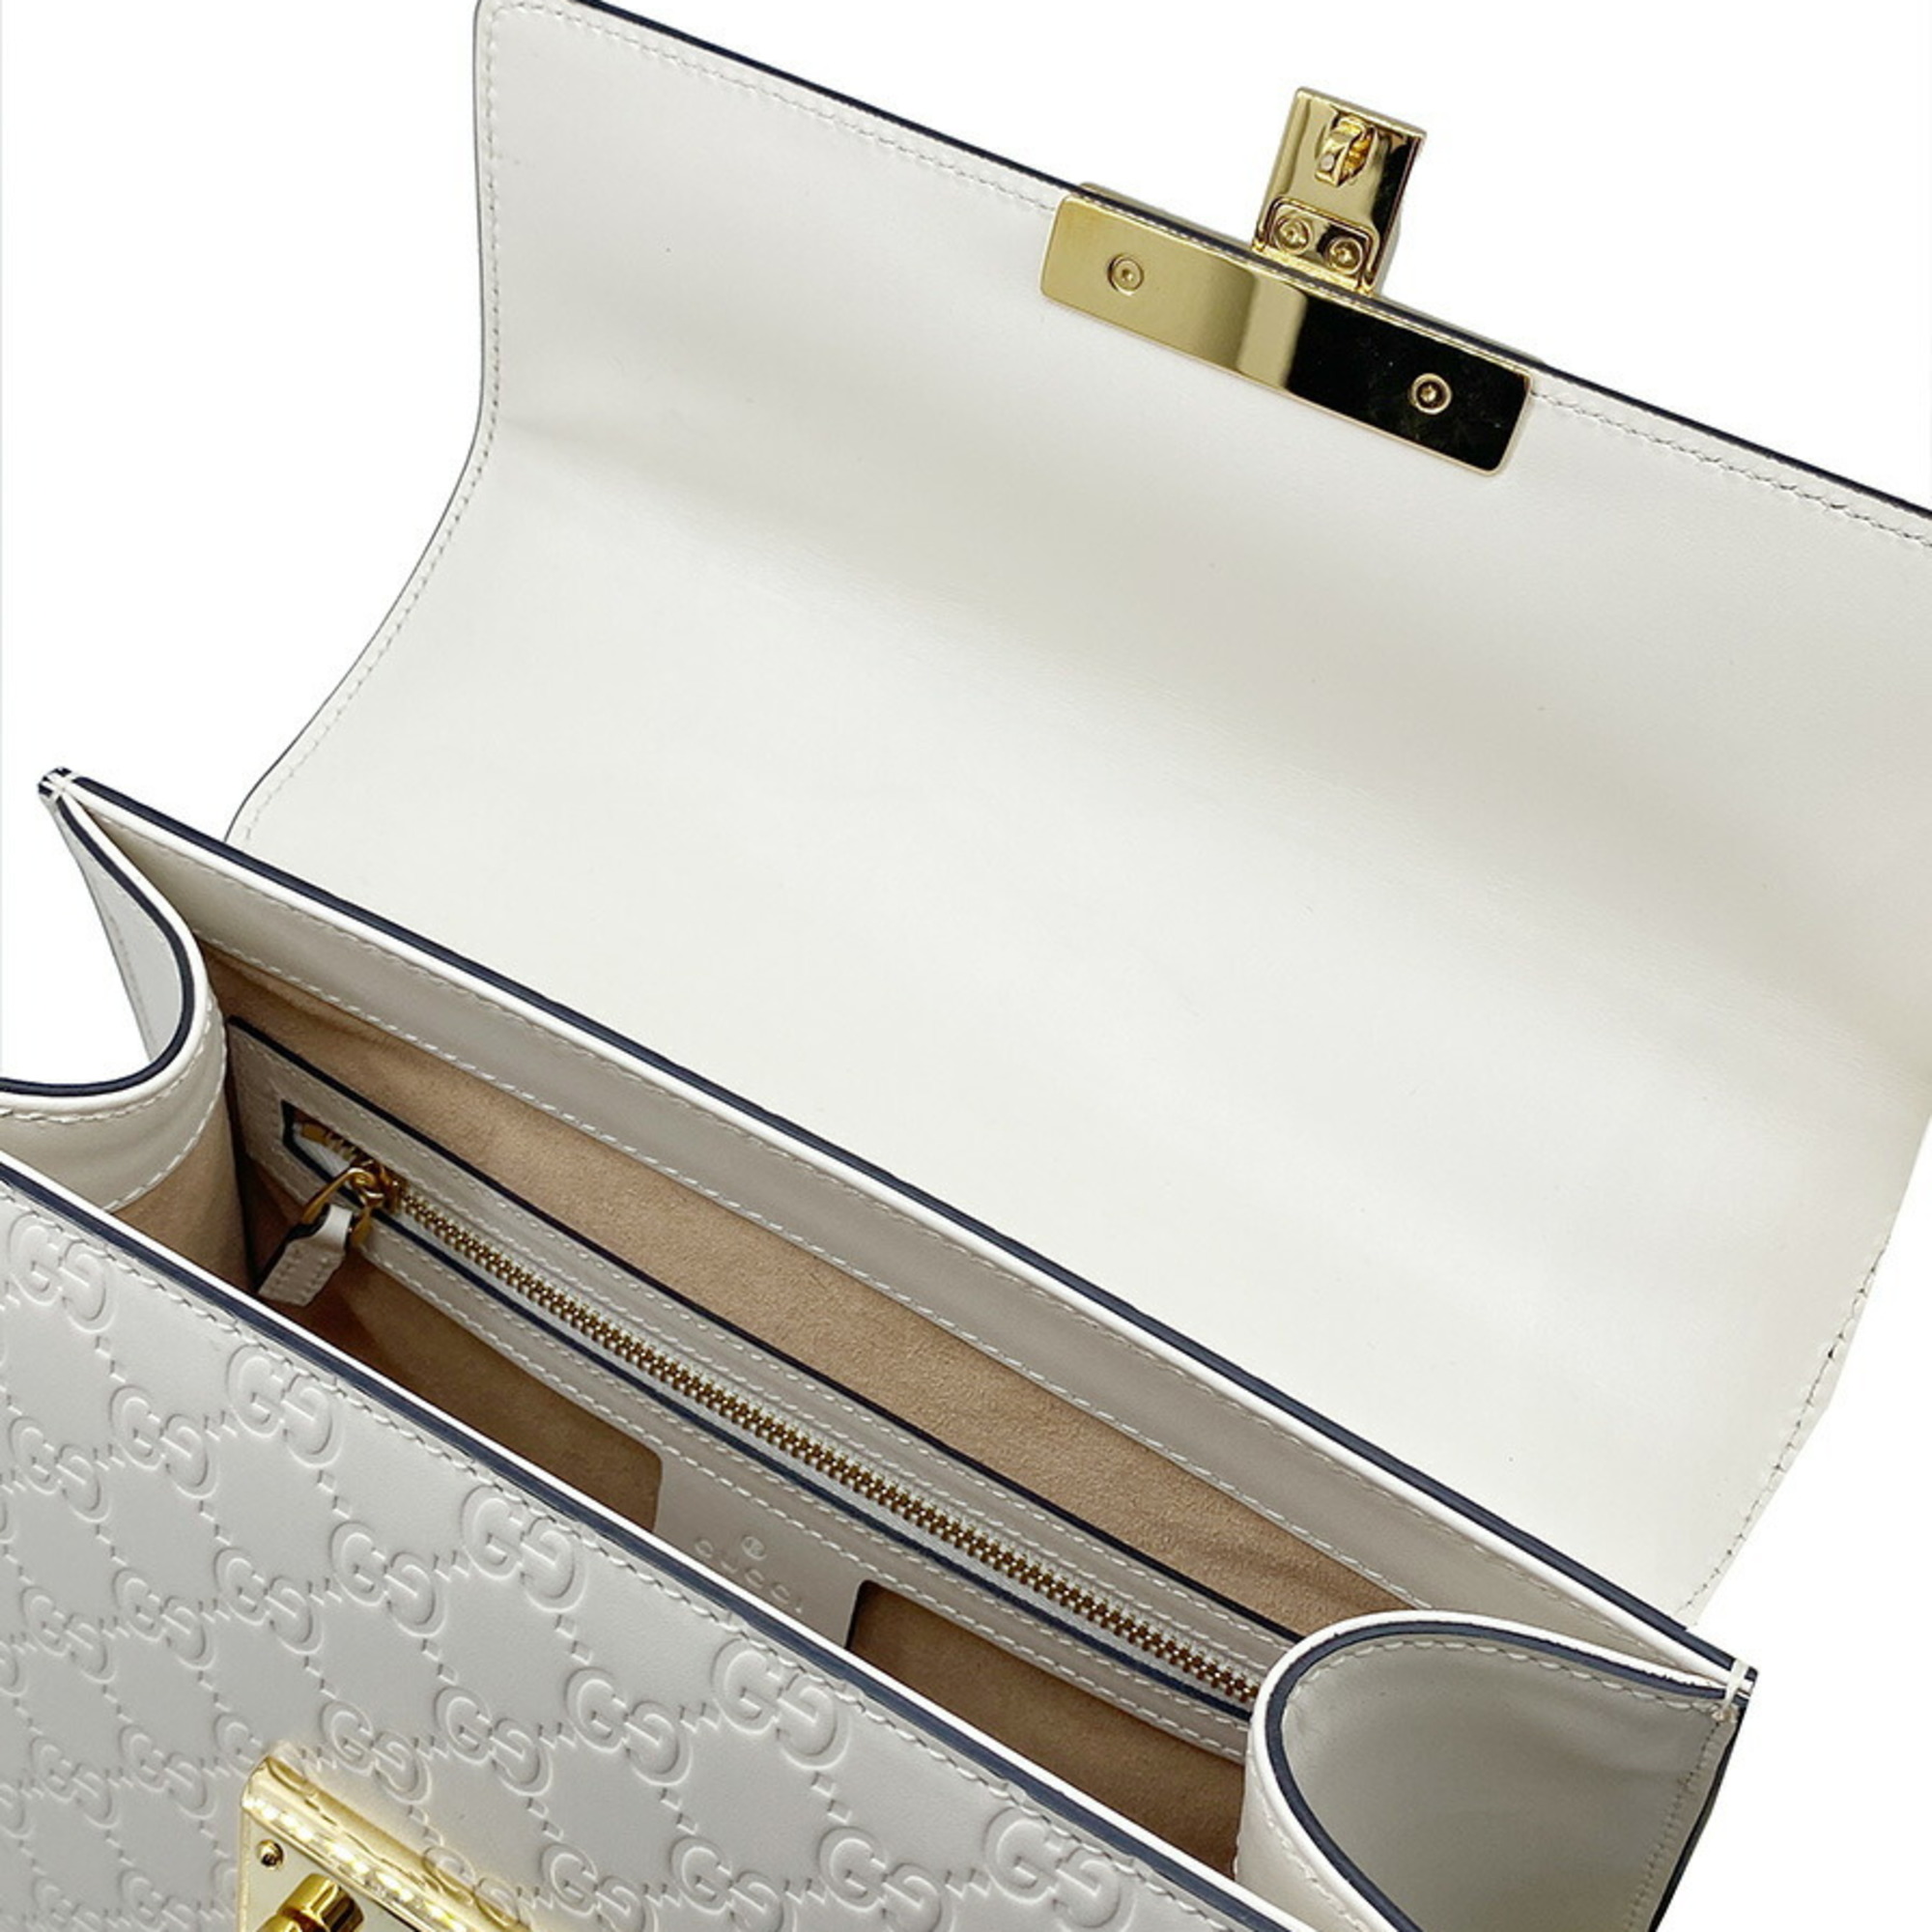 GUCCI Gucci Handbag Shoulder Bag 2way GG Black Off-White Leather Guccissima 453188 Women's